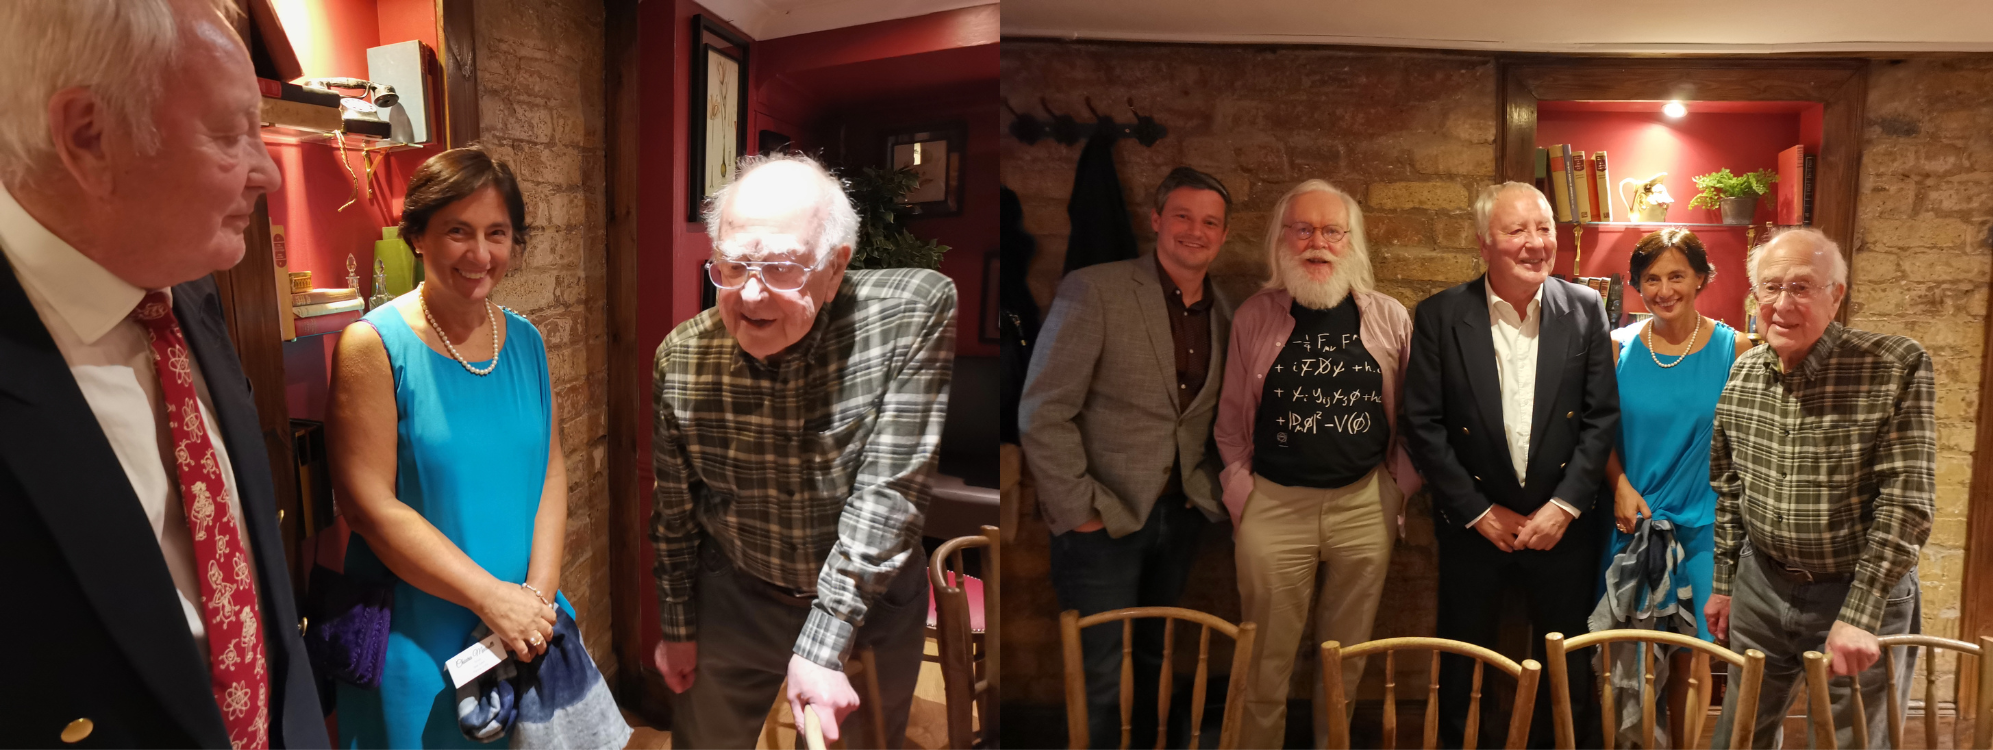 Professor Higgs' 90th Birthday Party